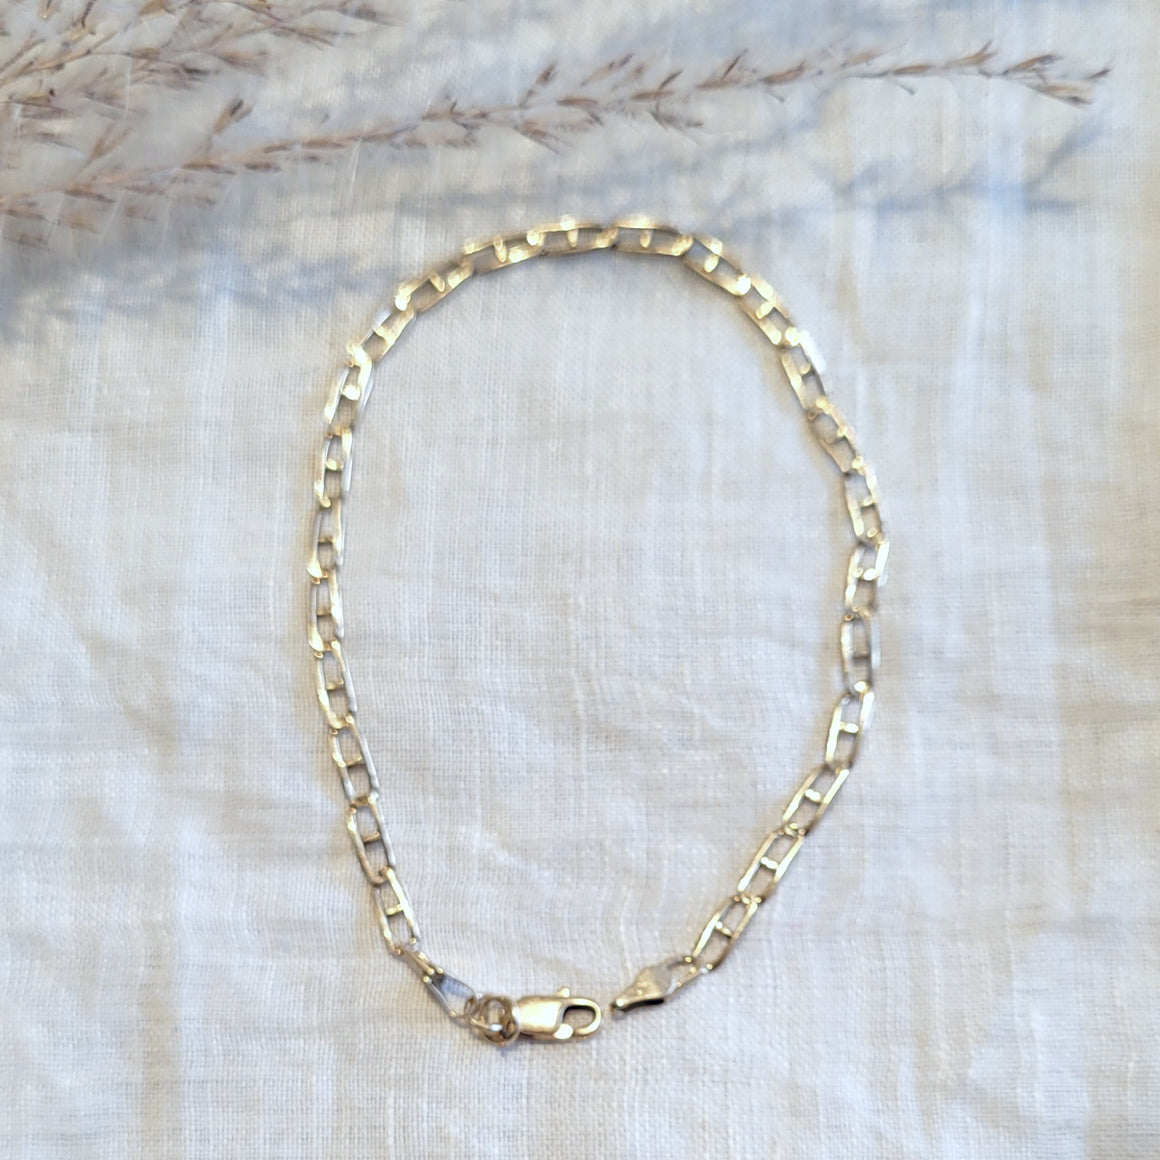 10k yellow gold anchor bracelet